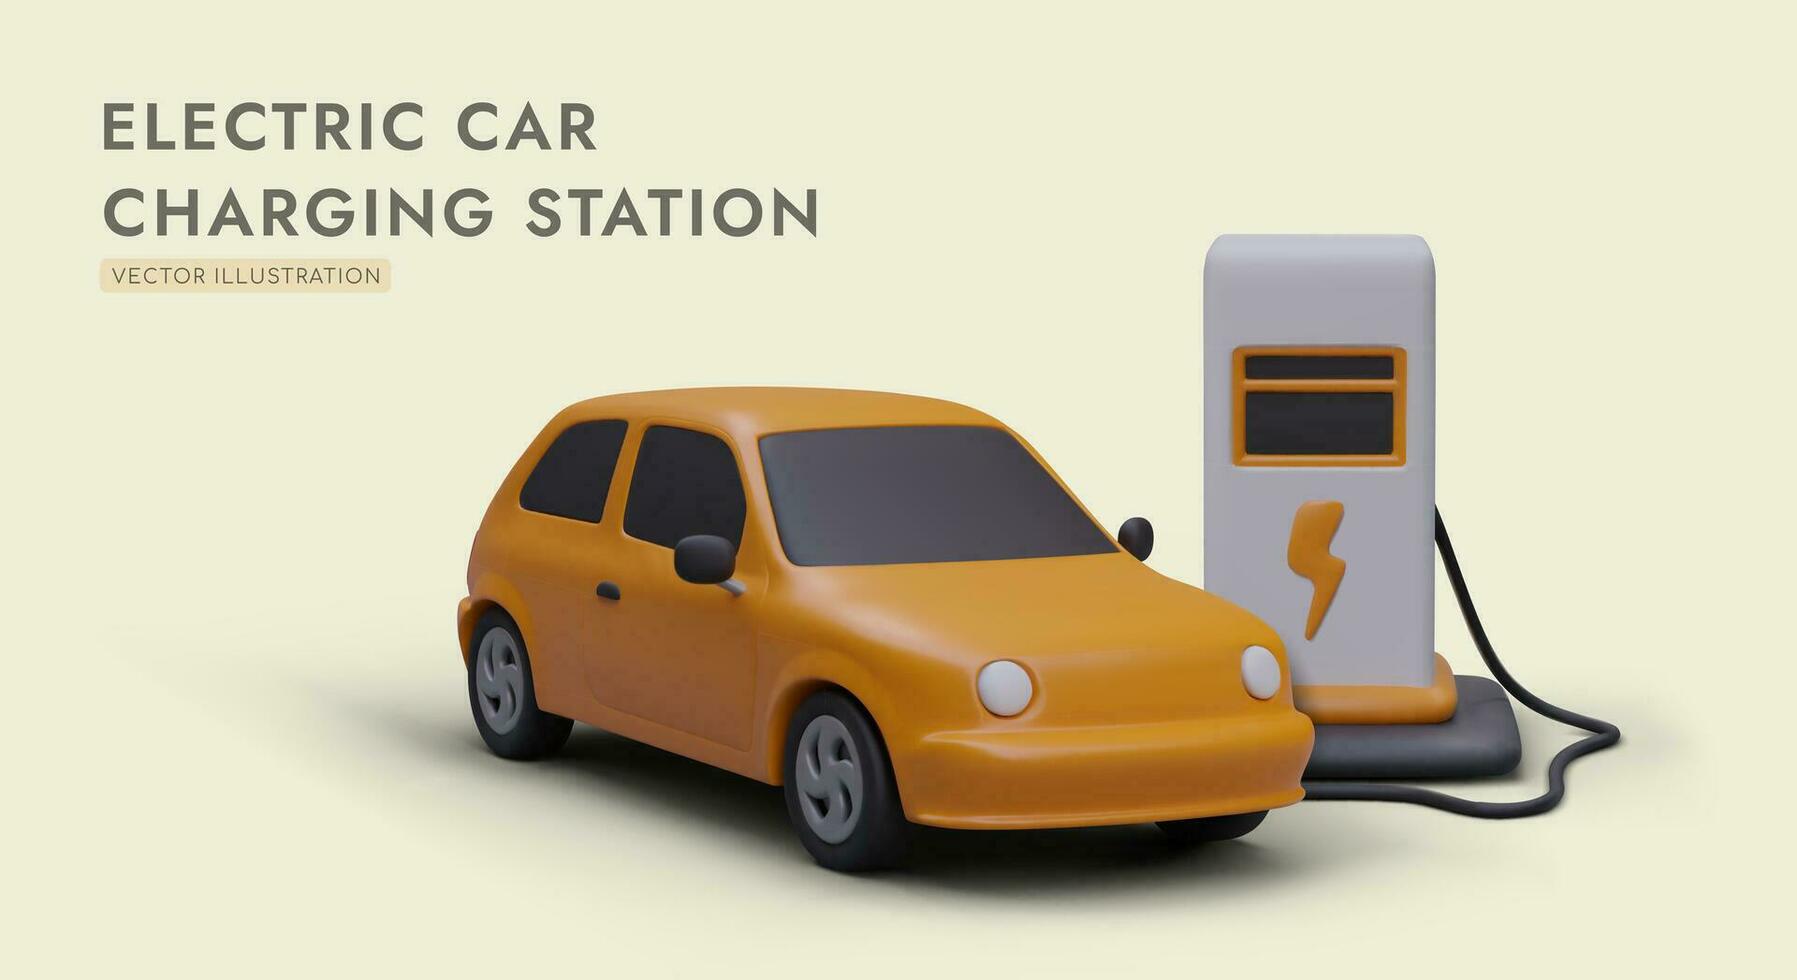 amarillo eléctrico coche es conectado a cargando estación. proceso de cargando coche batería vector